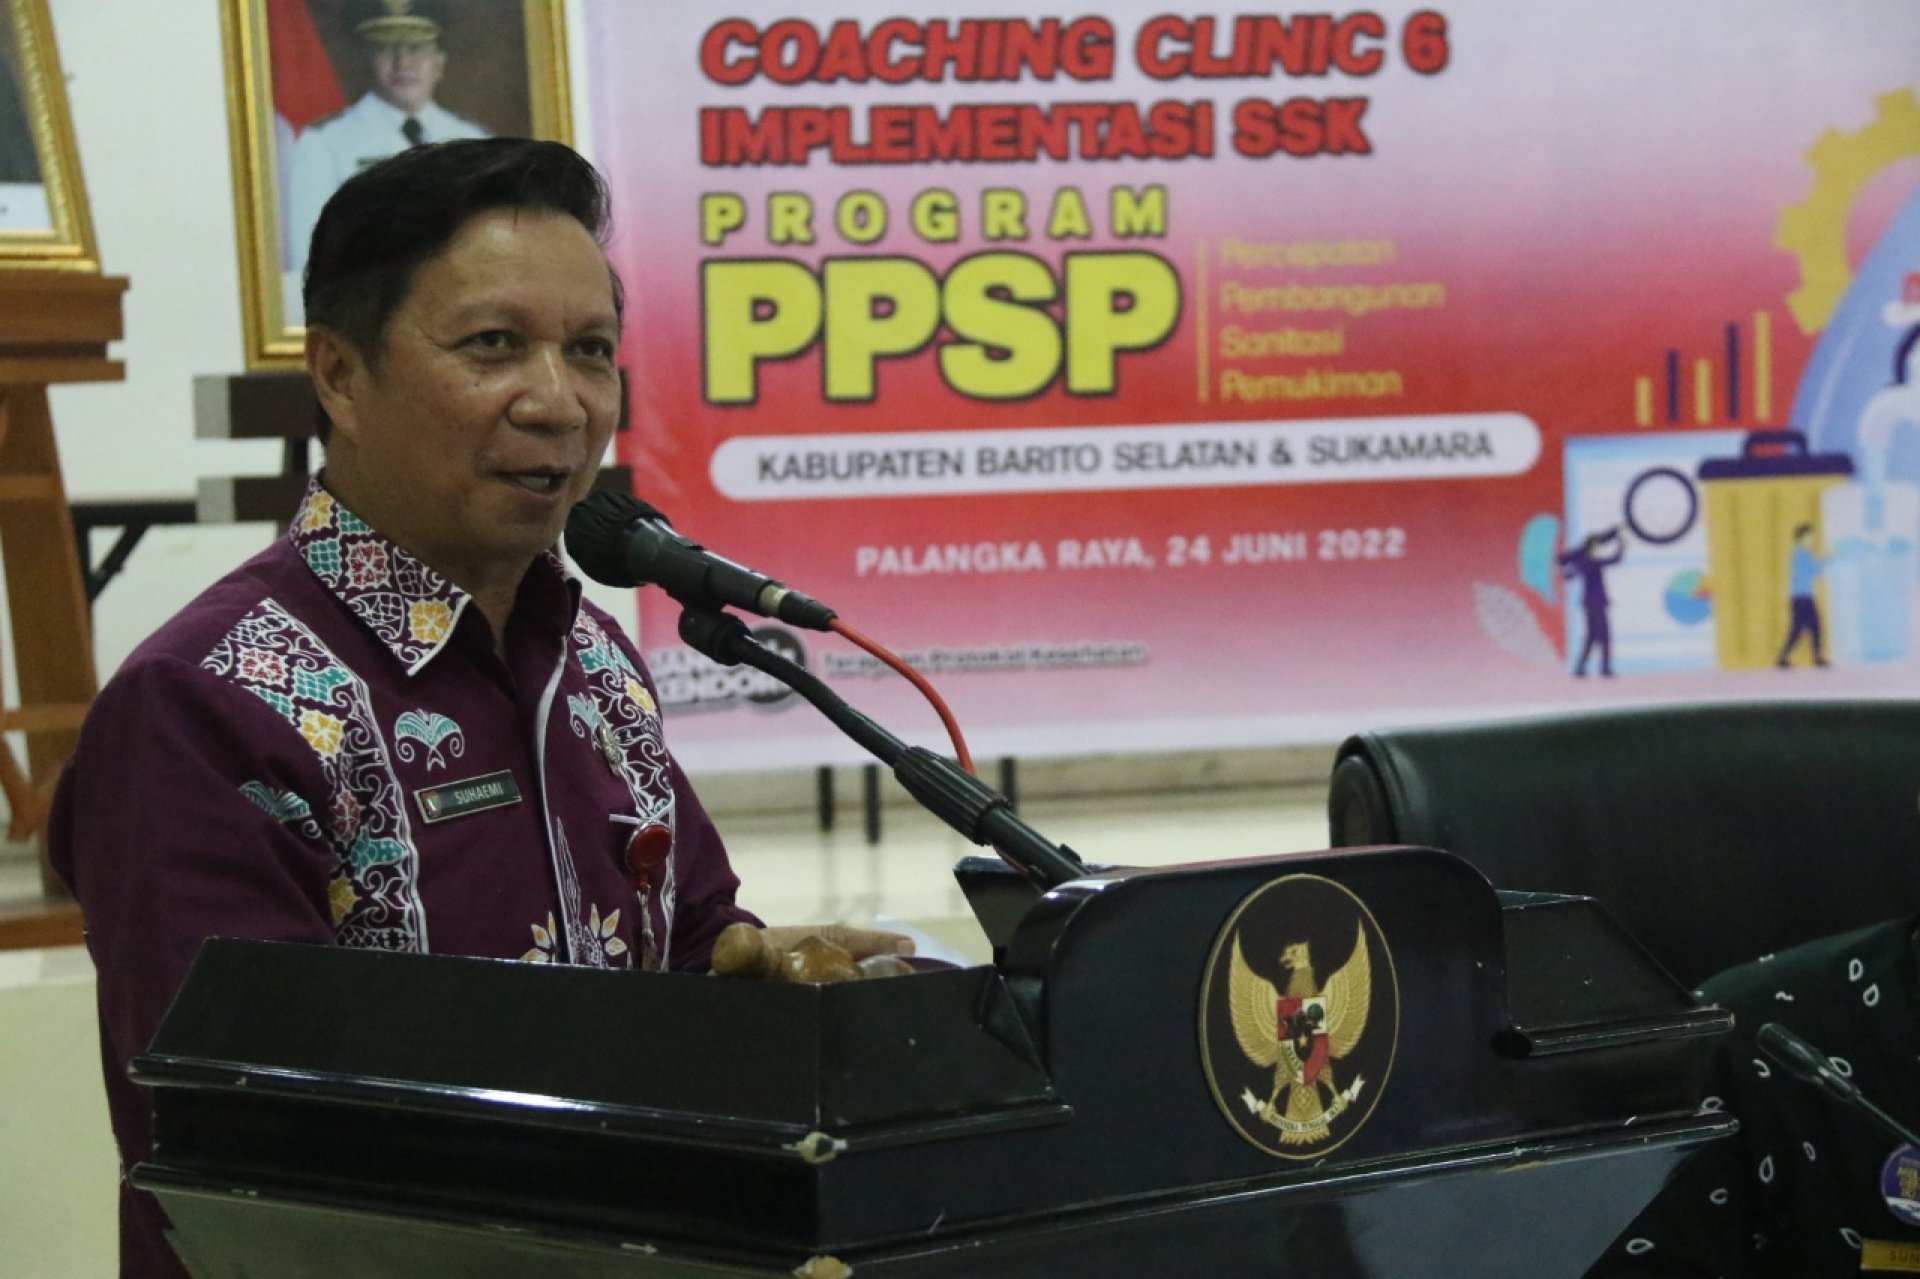 Pemprov Kalteng Gelar Coaching Clinic 6 Implementasi SSK Program PPSP Barito Selatan dan Sukamara